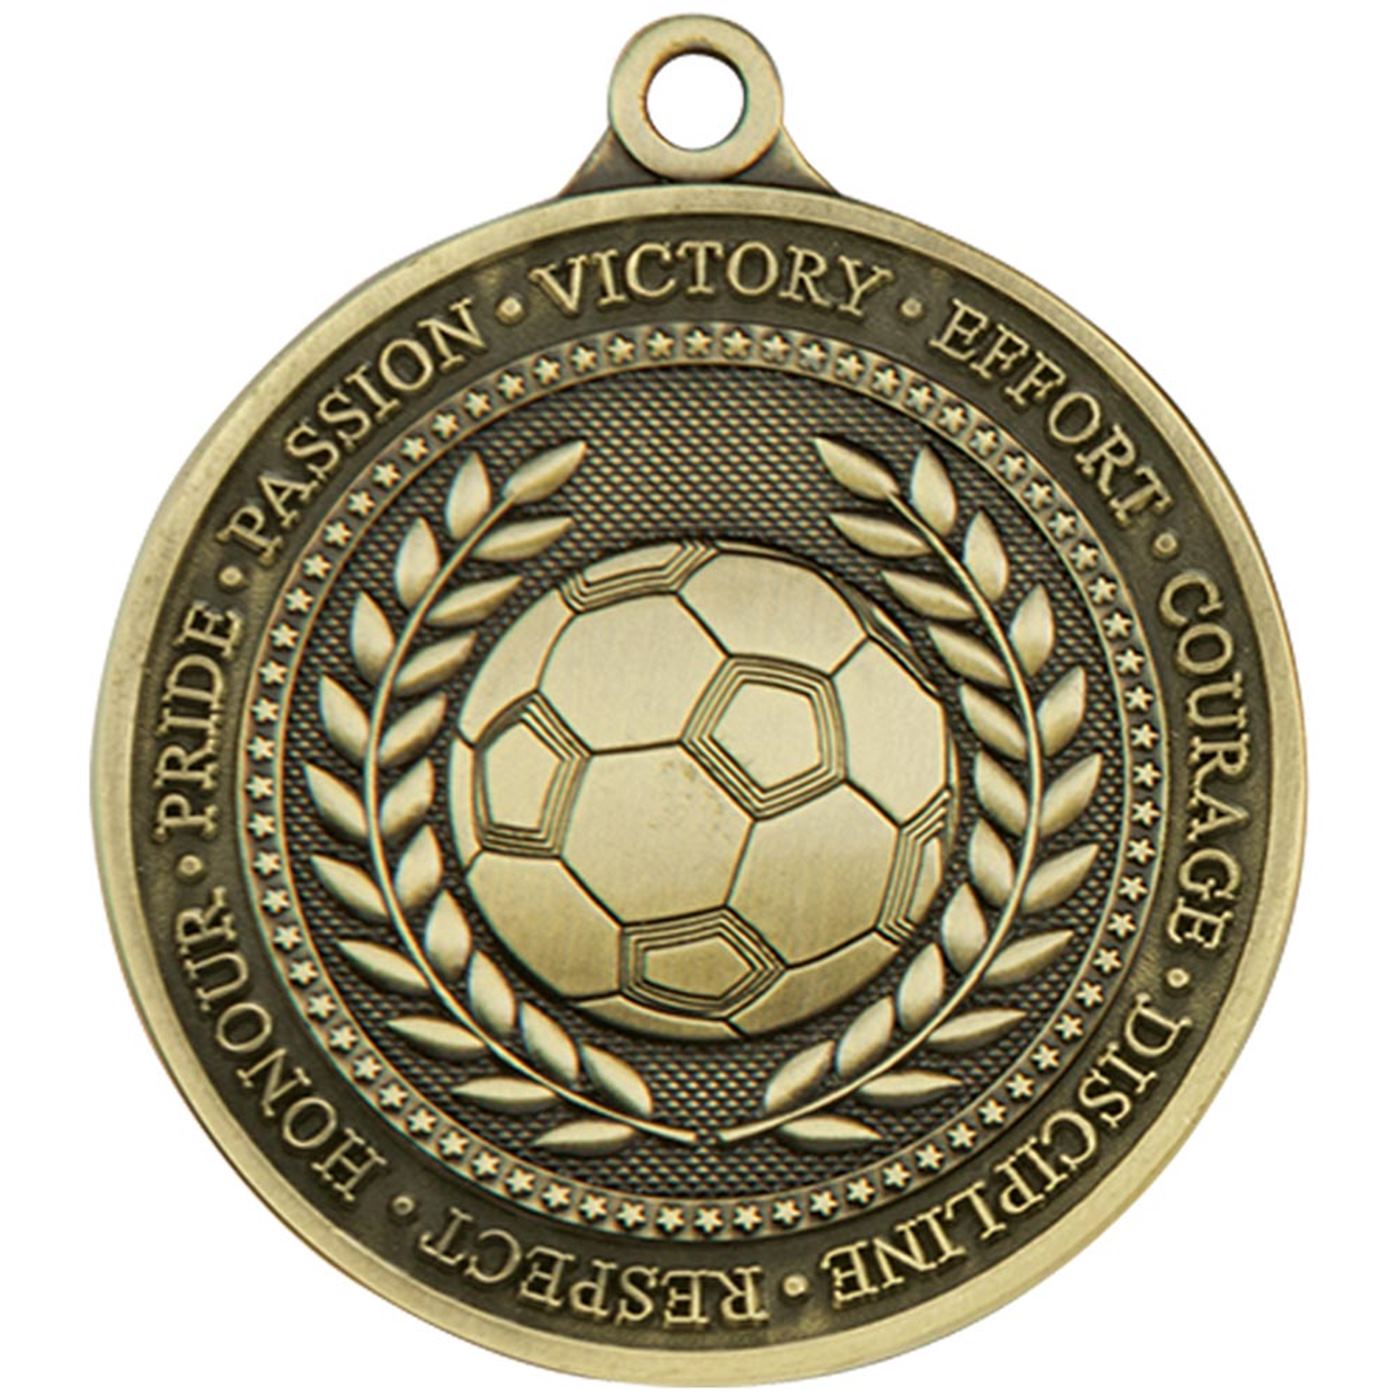 Olympia Laurel Football Medal - 6cm